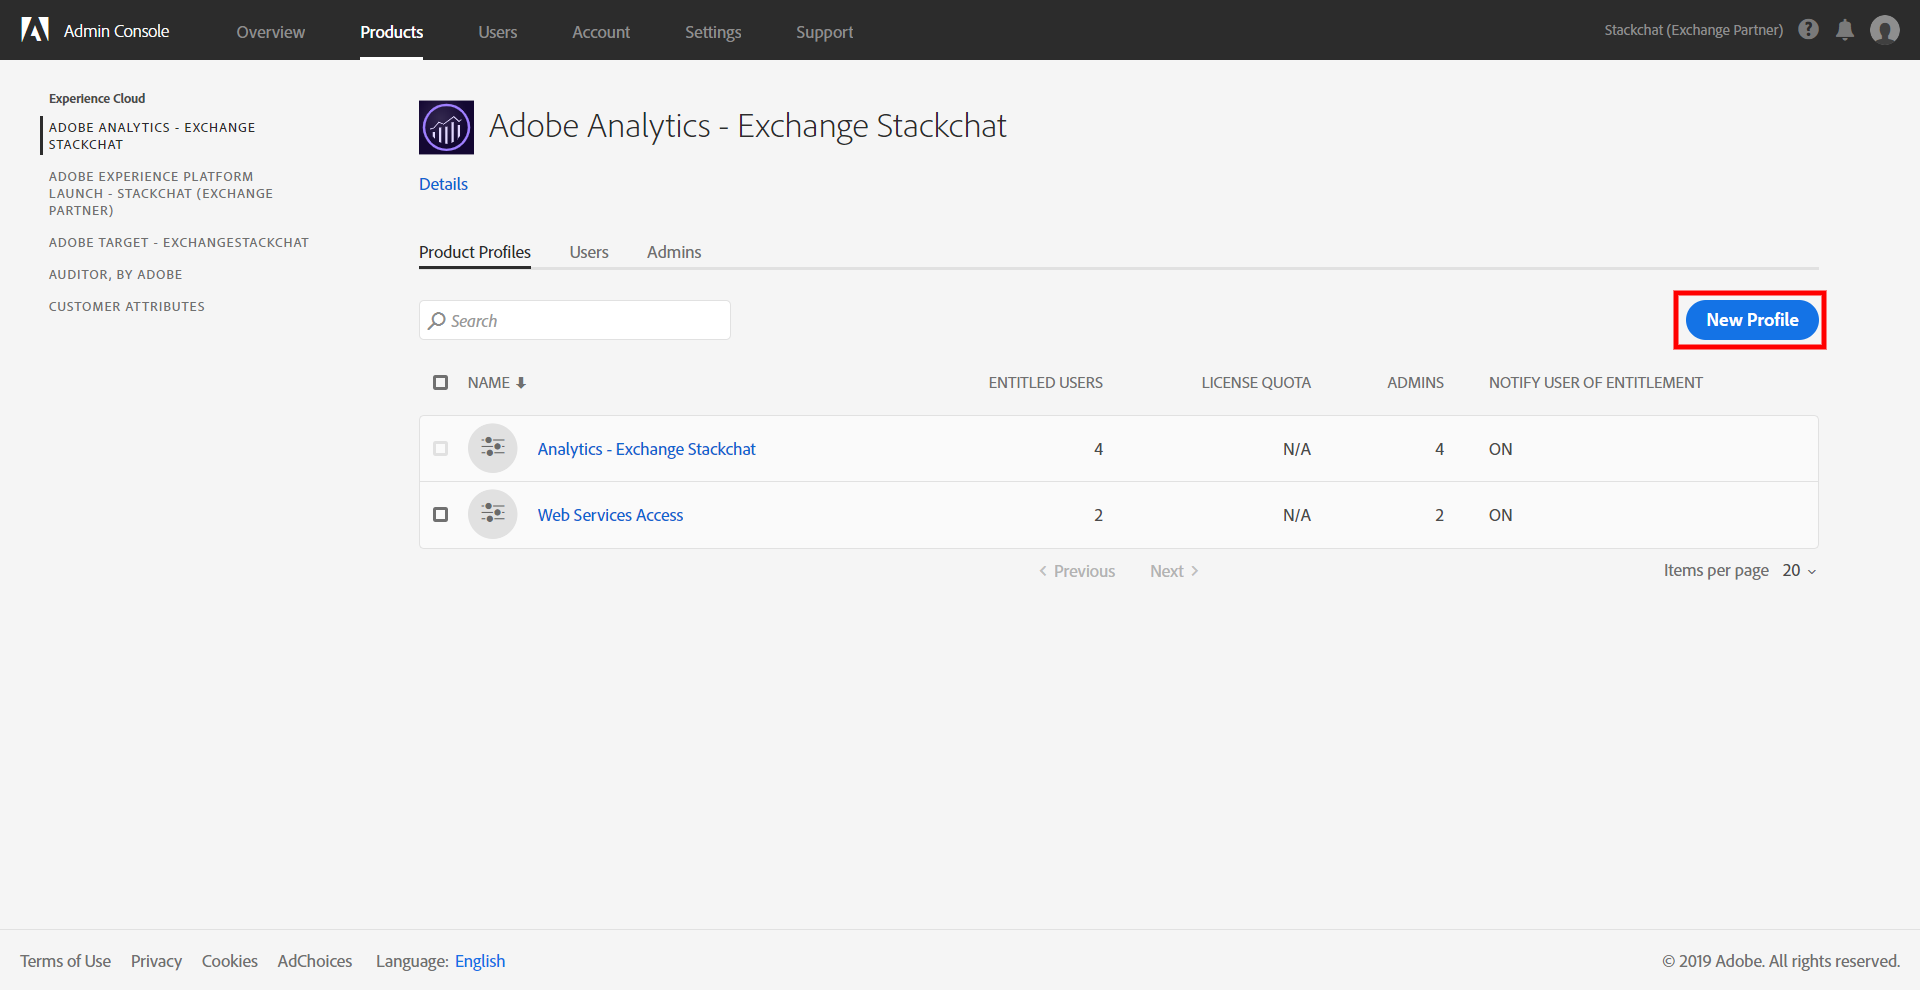 Adobe Analytics Product Profiles Page